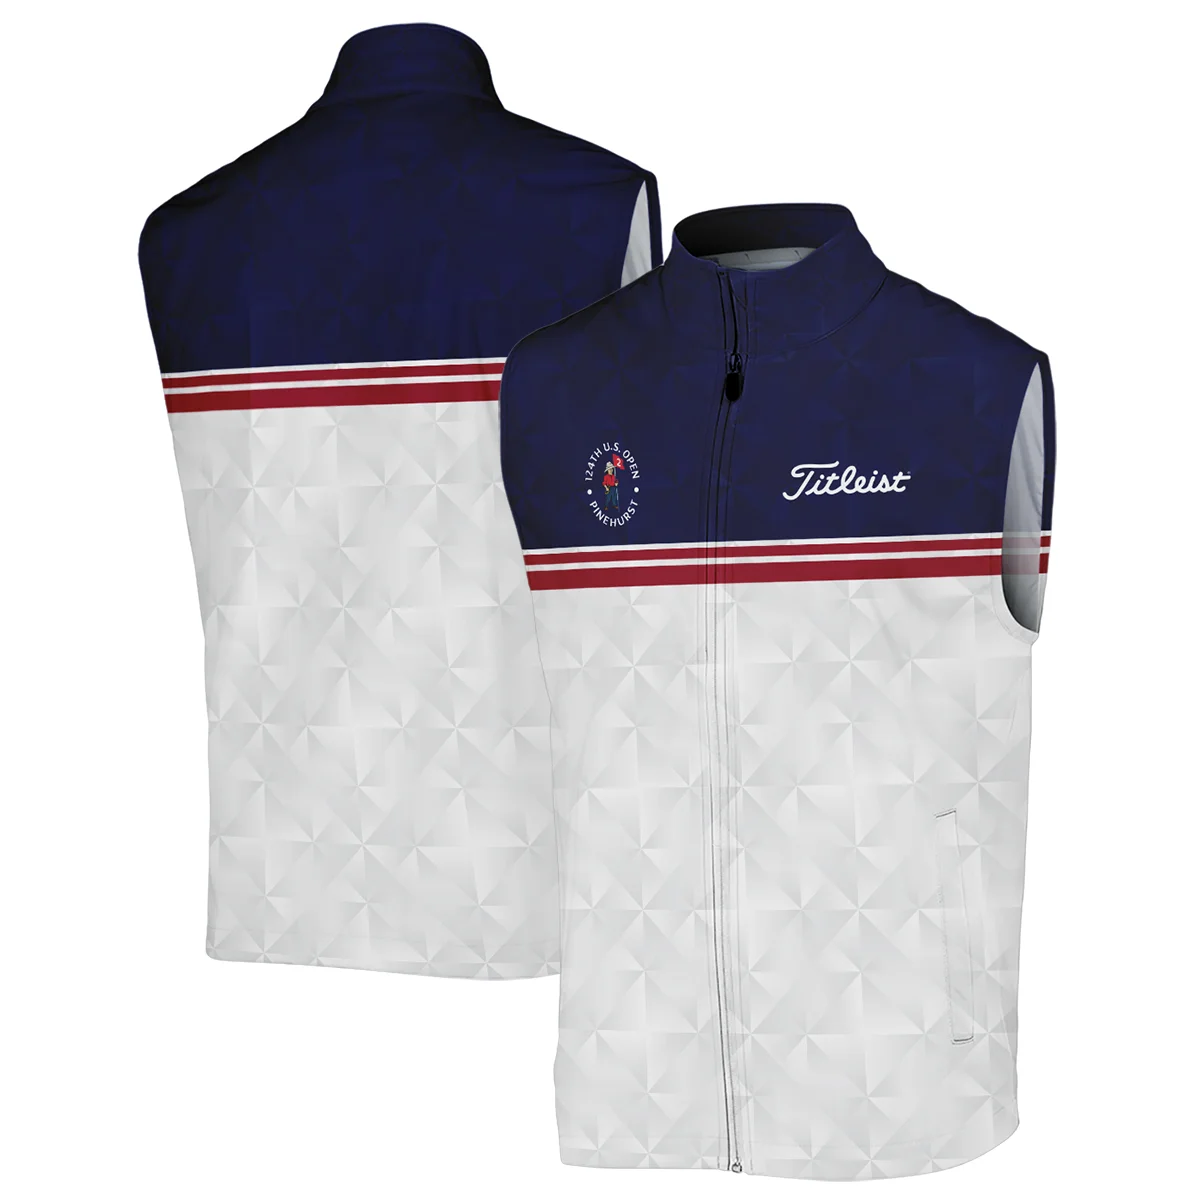 Golf Sport 124th U.S. Open Pinehurst Titleist Sleeveless Jacket Dark Blue White Abstract Geometric Triangles All Over Print Sleeveless Jacket